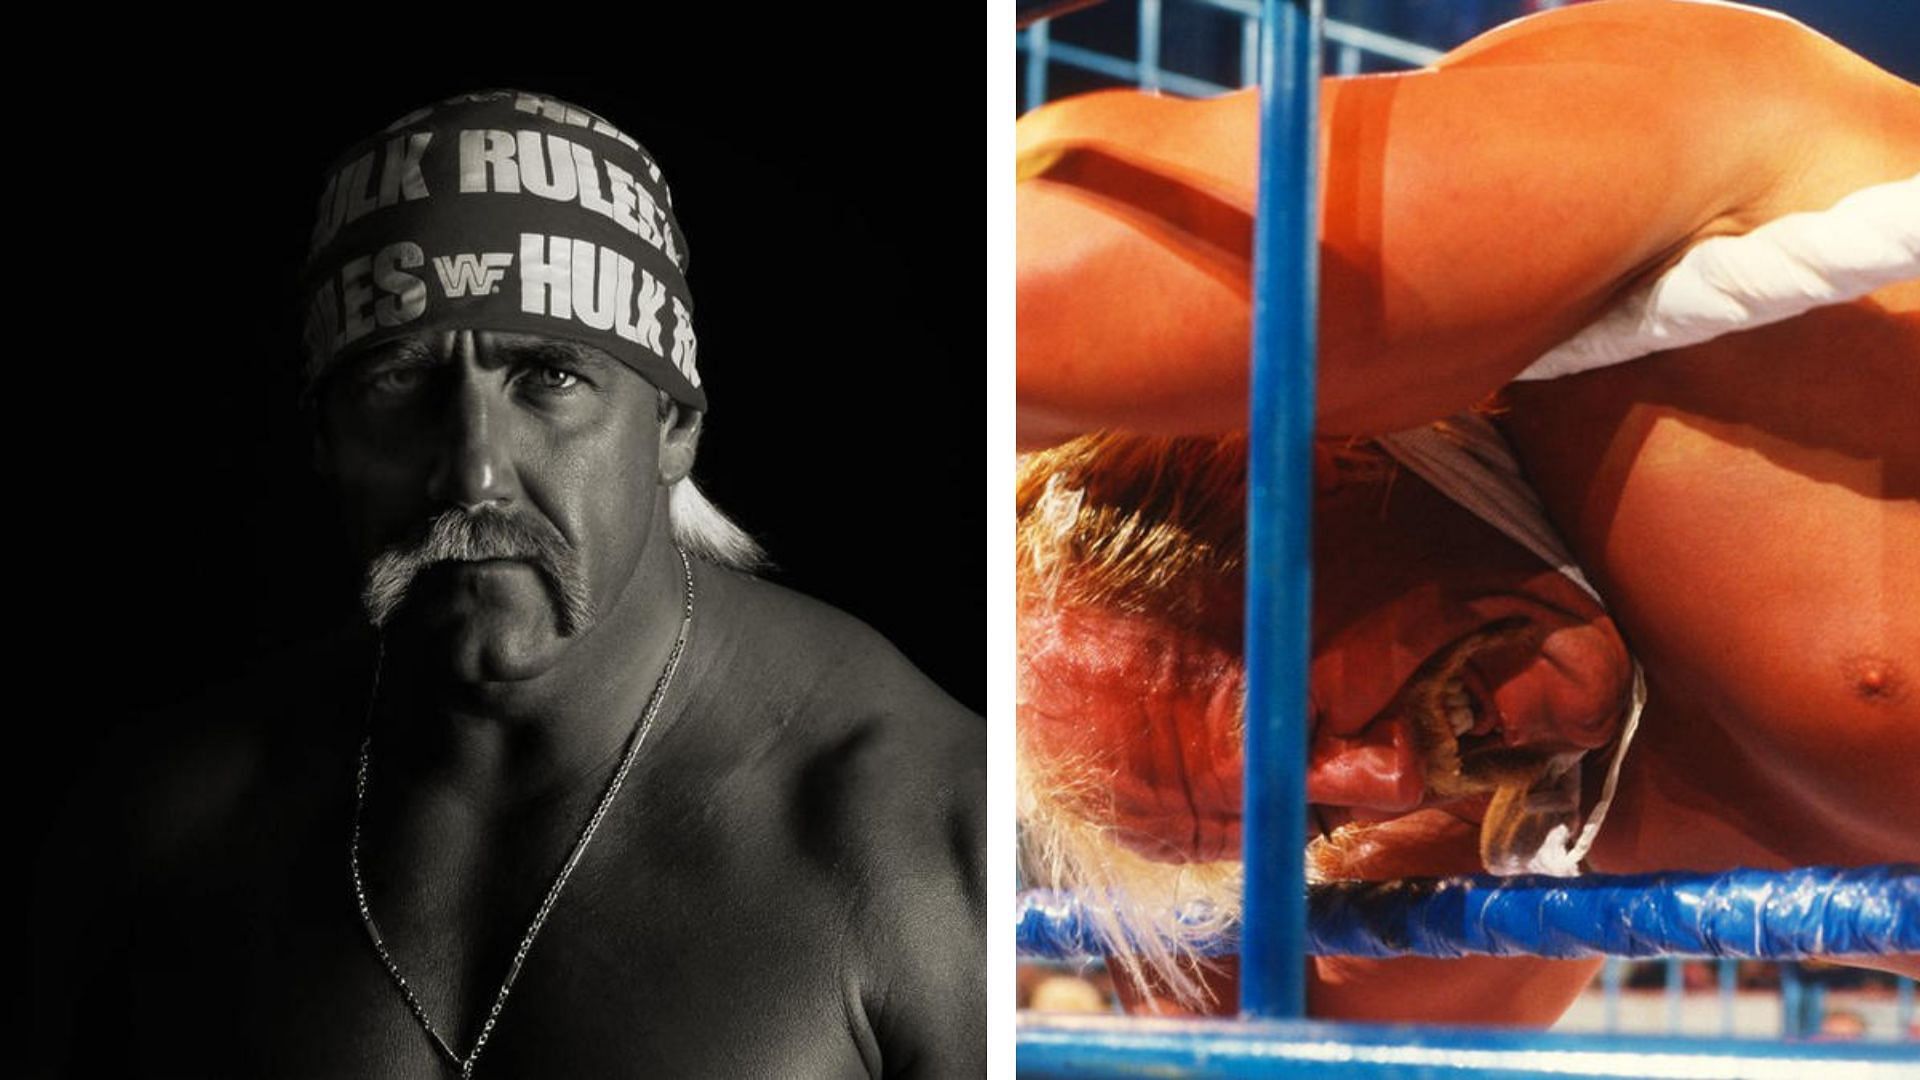 Hulk Hogan had his last match outside WWE